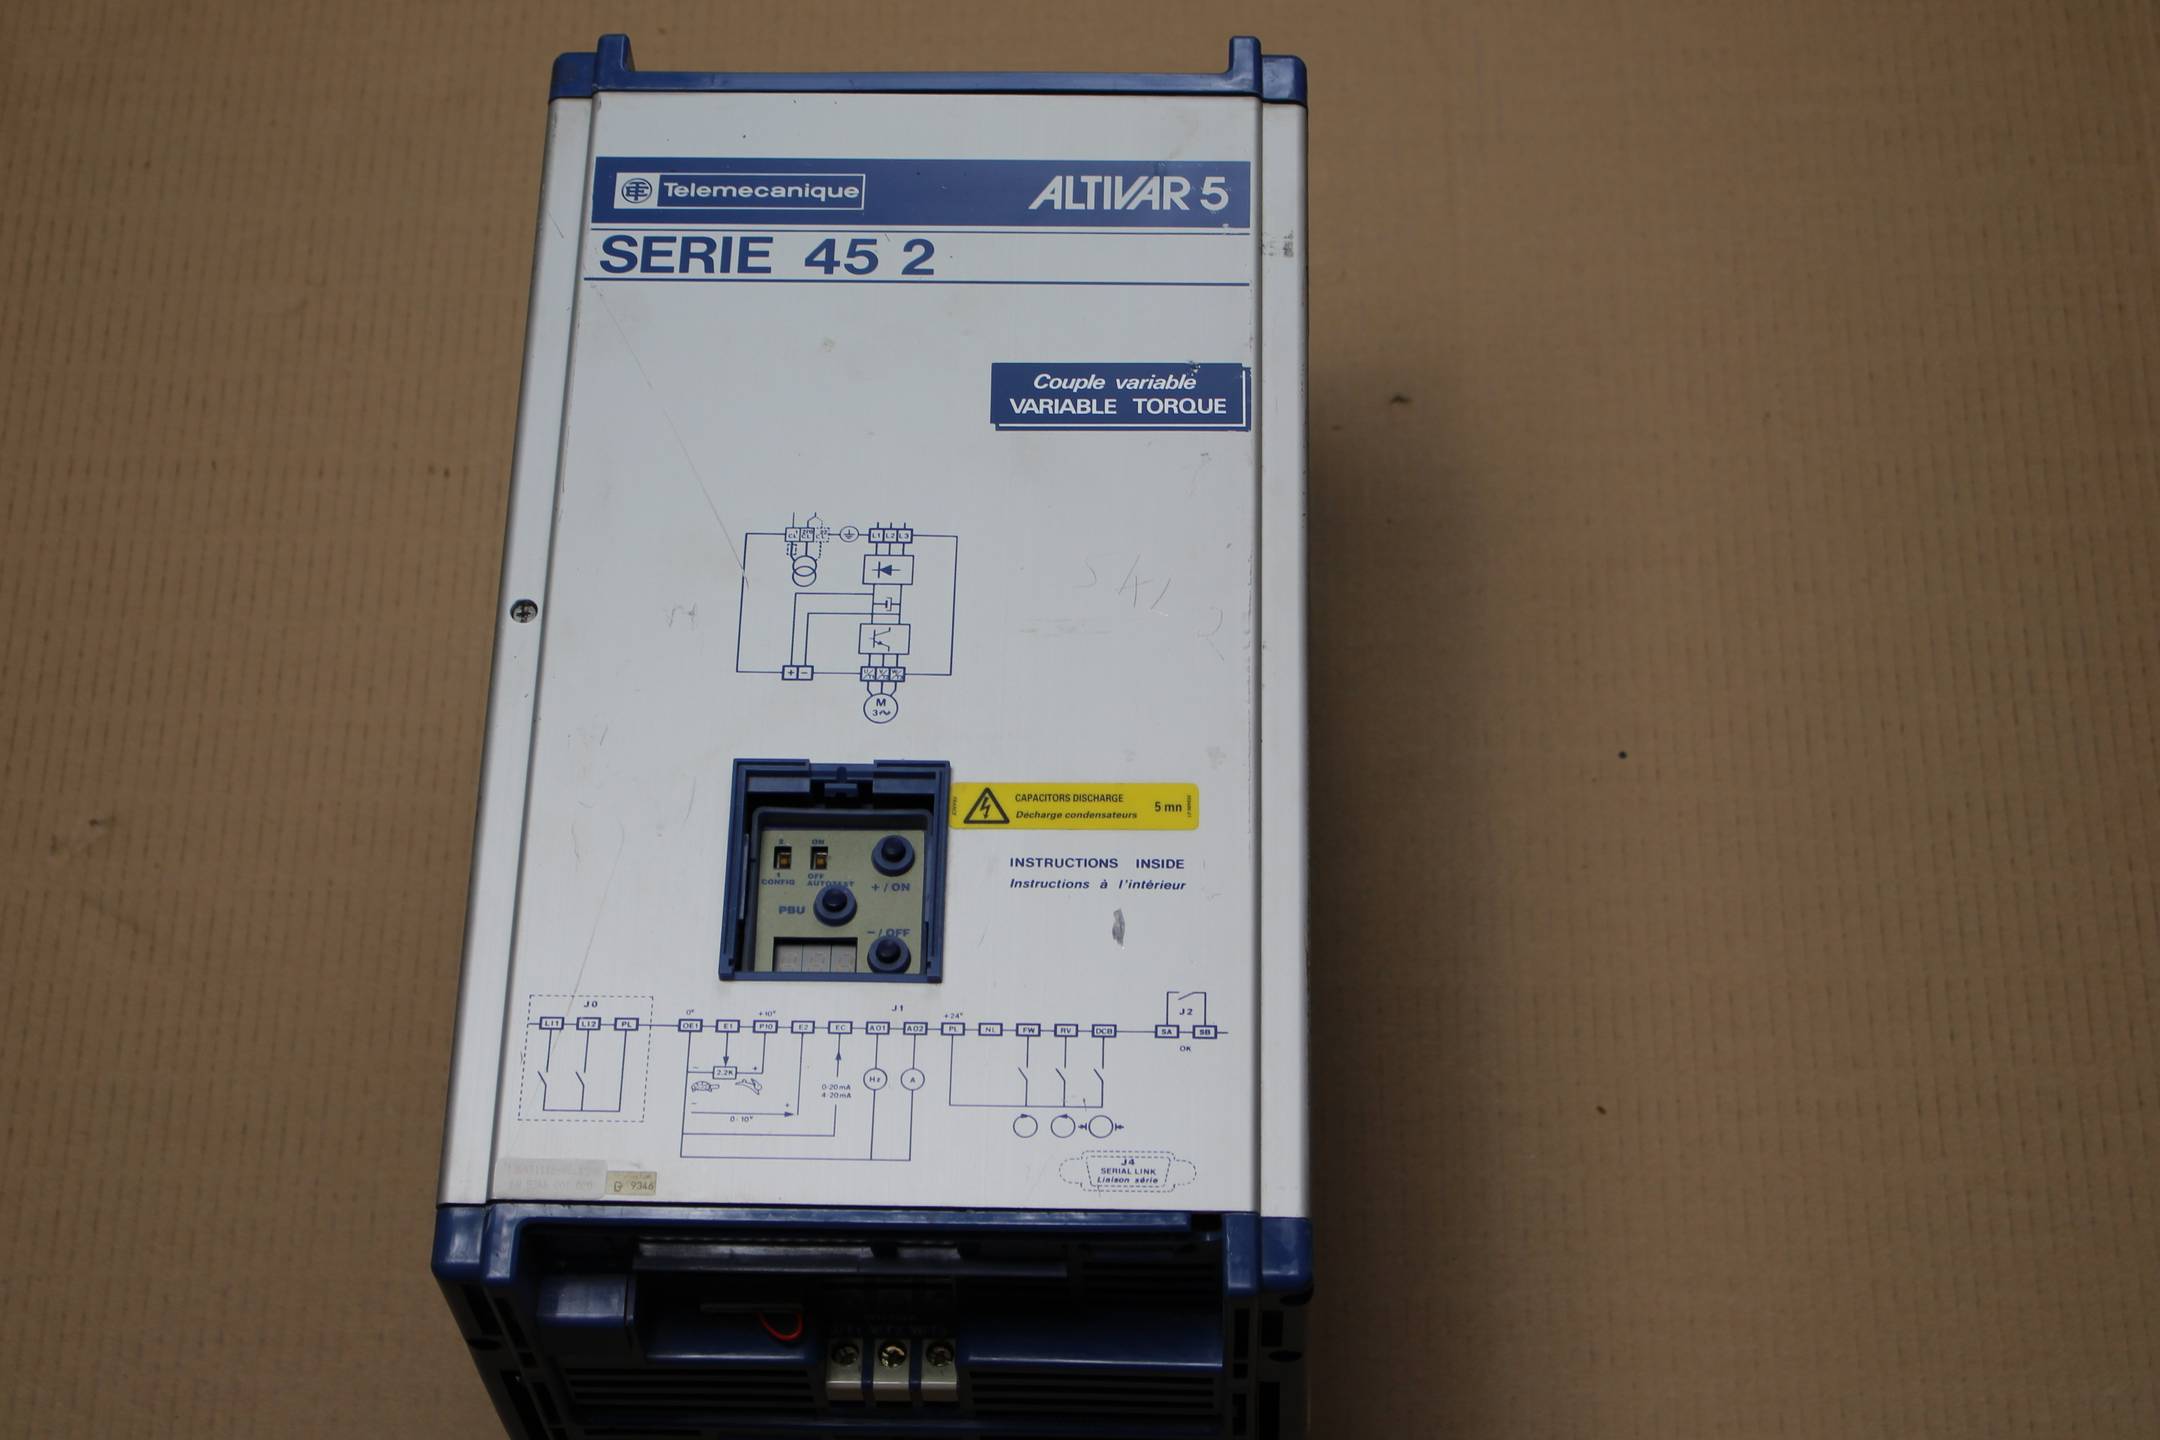 Telemecanique ATV452VD11 Frequenzumrichter ( Frequency converter ) 